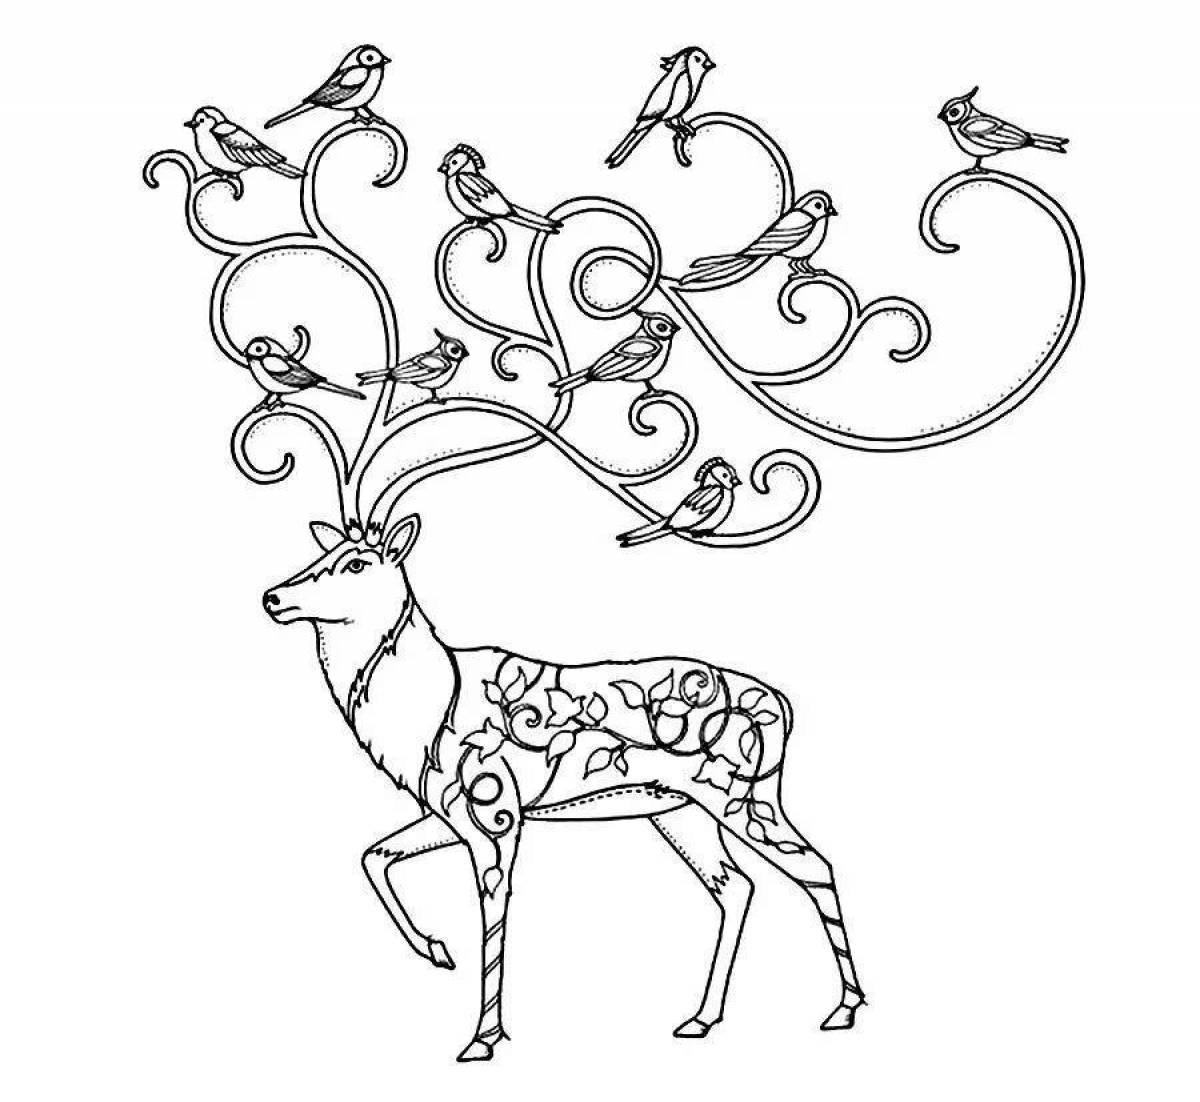 Fancy deer antistress coloring book